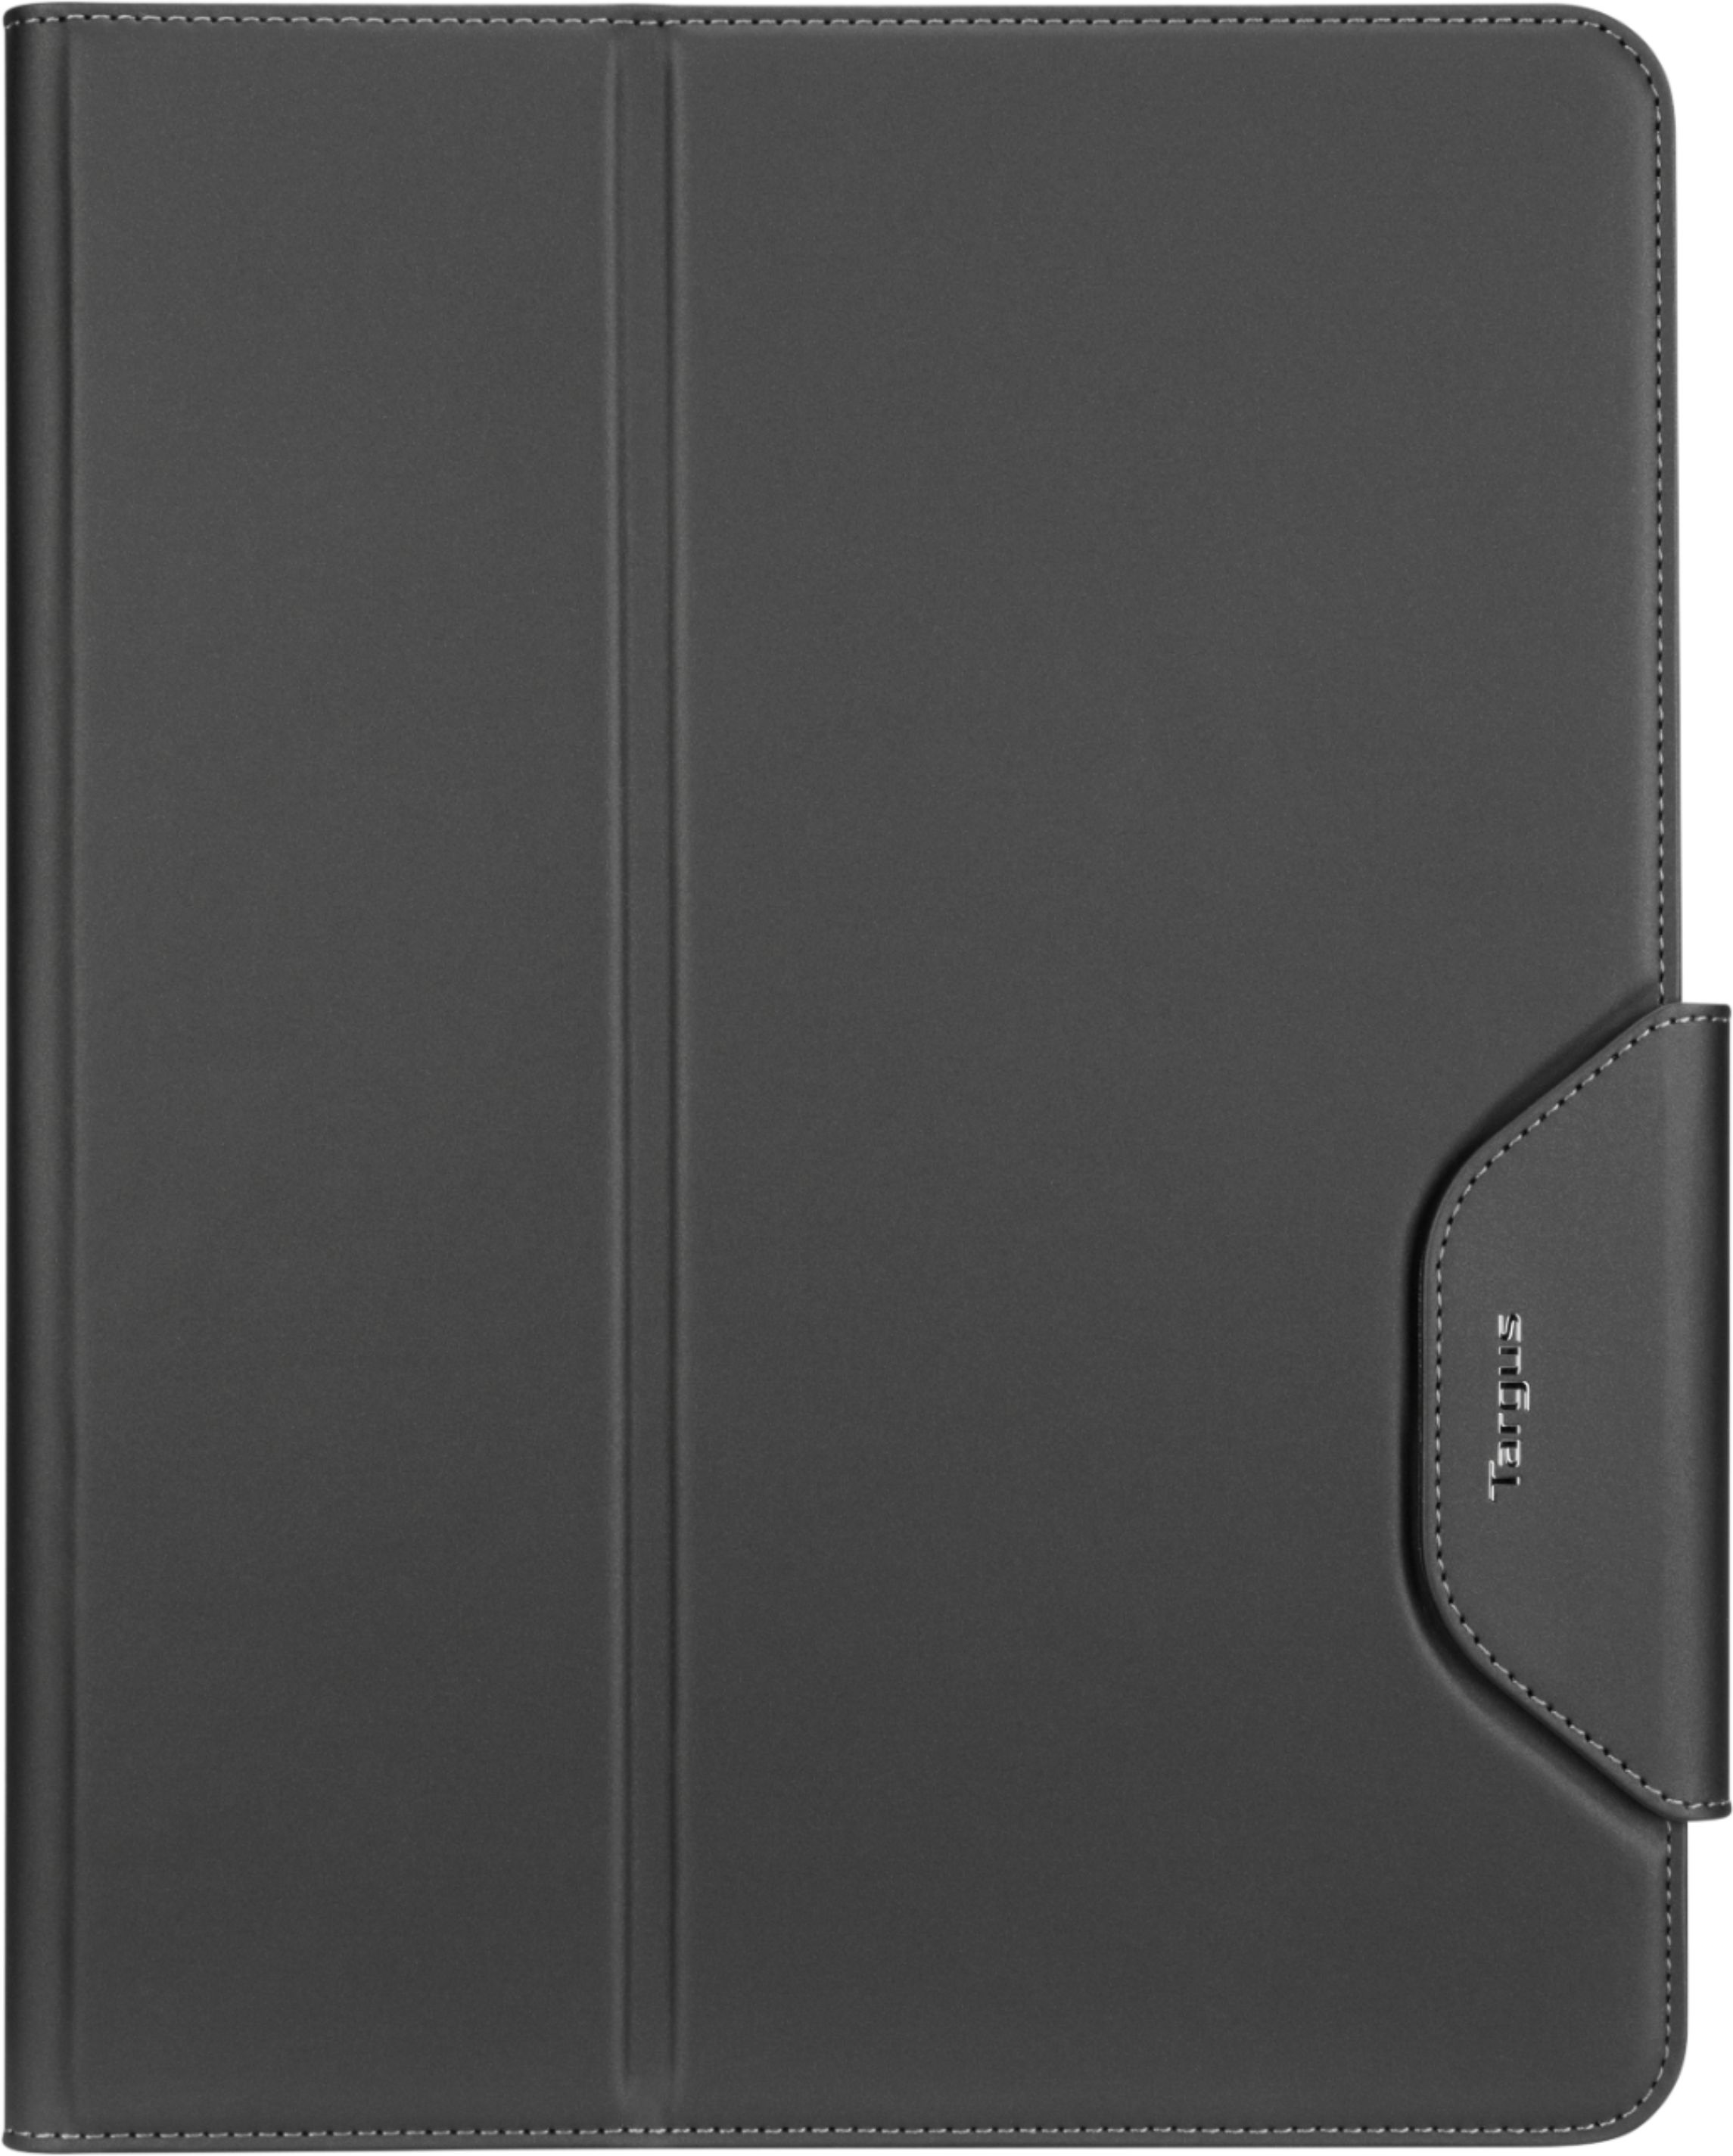 Oxford Slim Leather iPad Pro 12.9 Case.